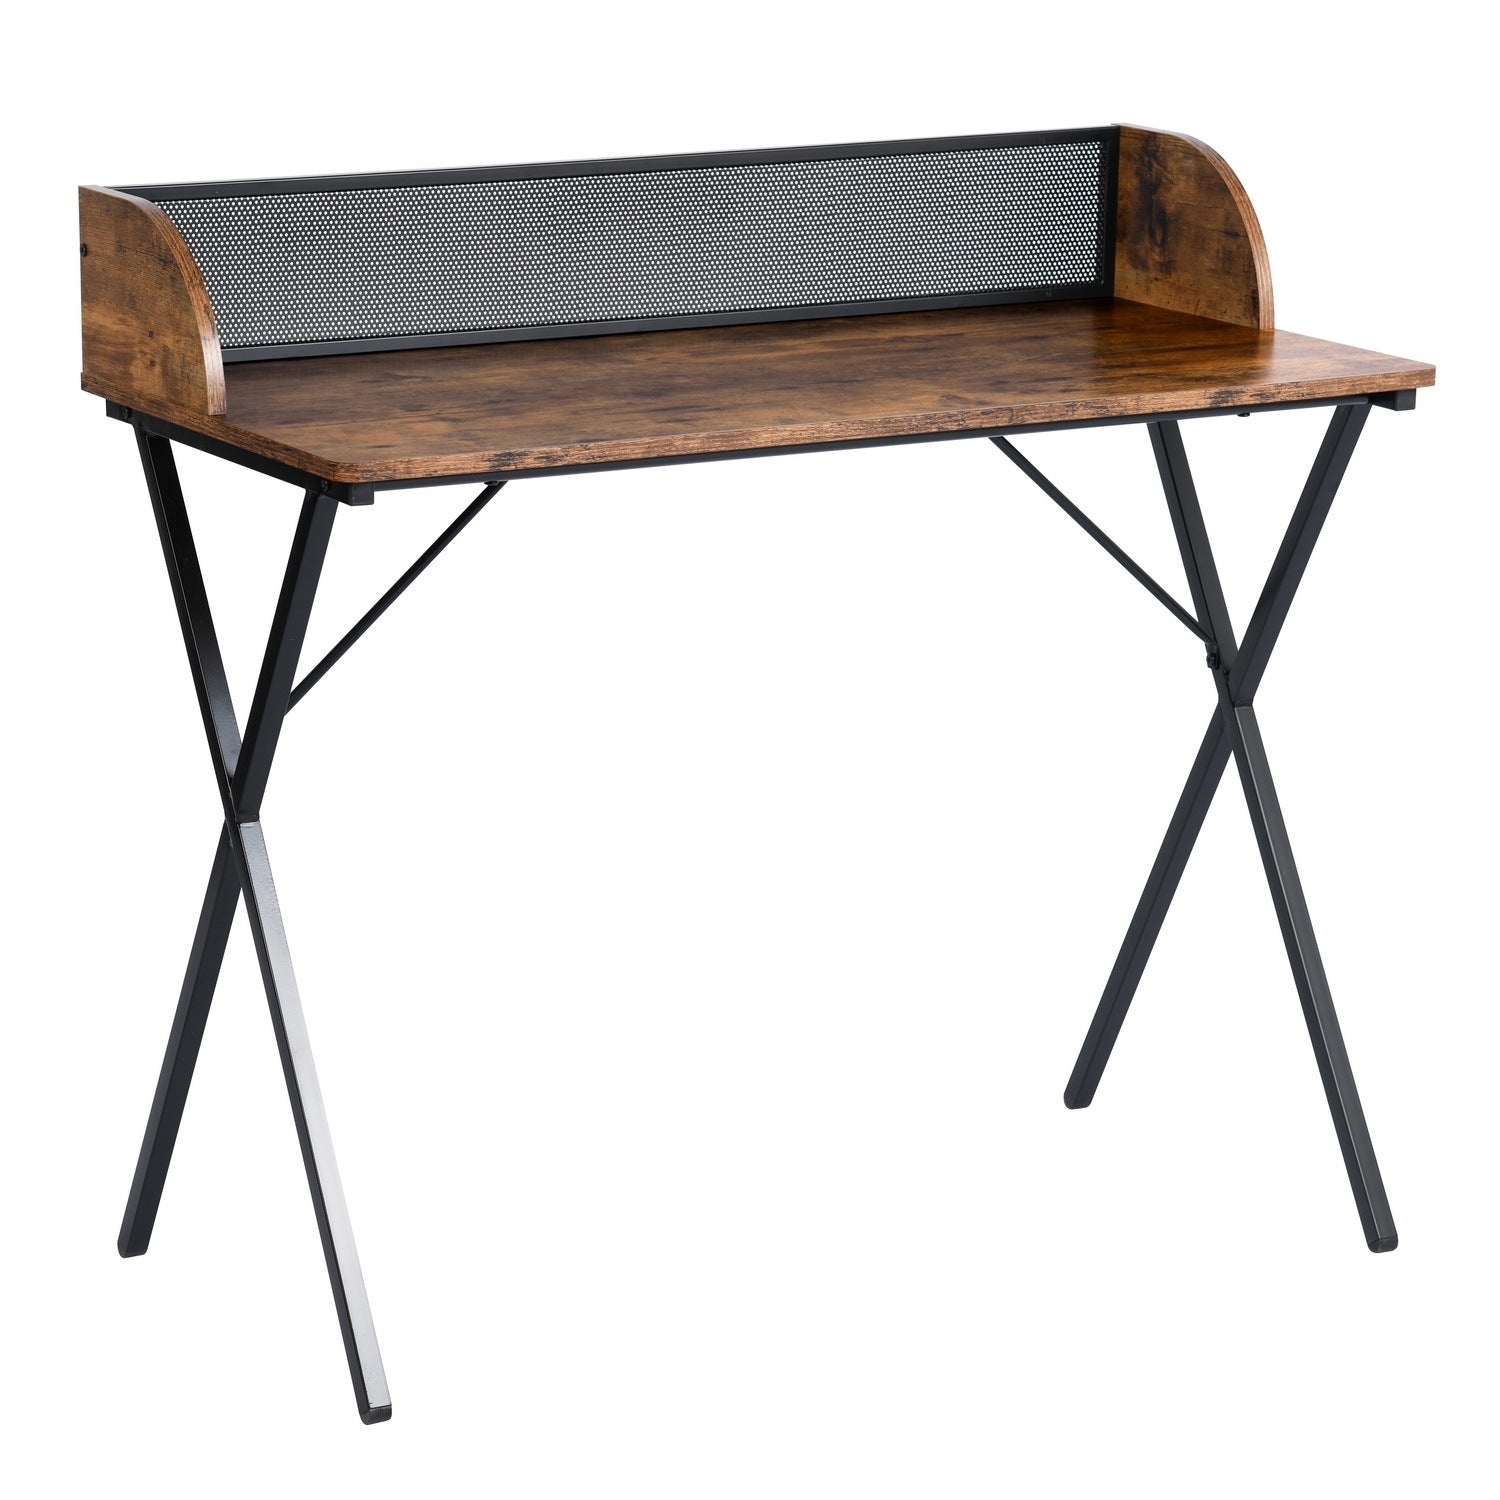 39.4"" L Rectangular Computer Desk, Writing Desk full black-office-poplar-rectangular-mdf-metal & wood